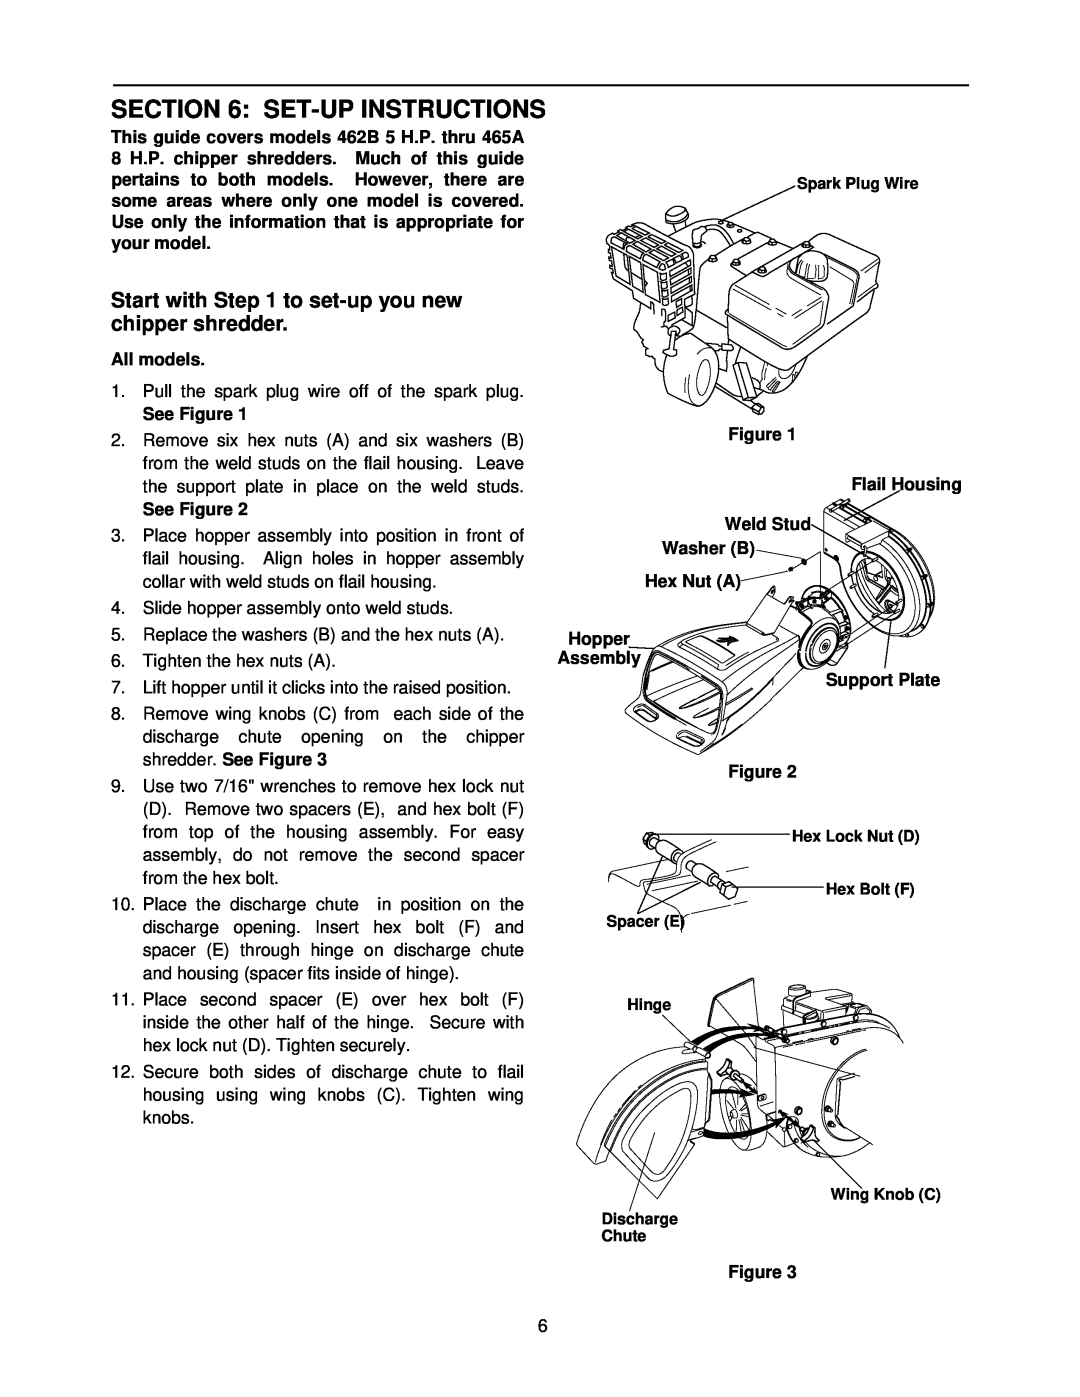 Bolens 462 Thru 465 manual Set-Up Instructions, Start with to set-up you new chipper shredder 